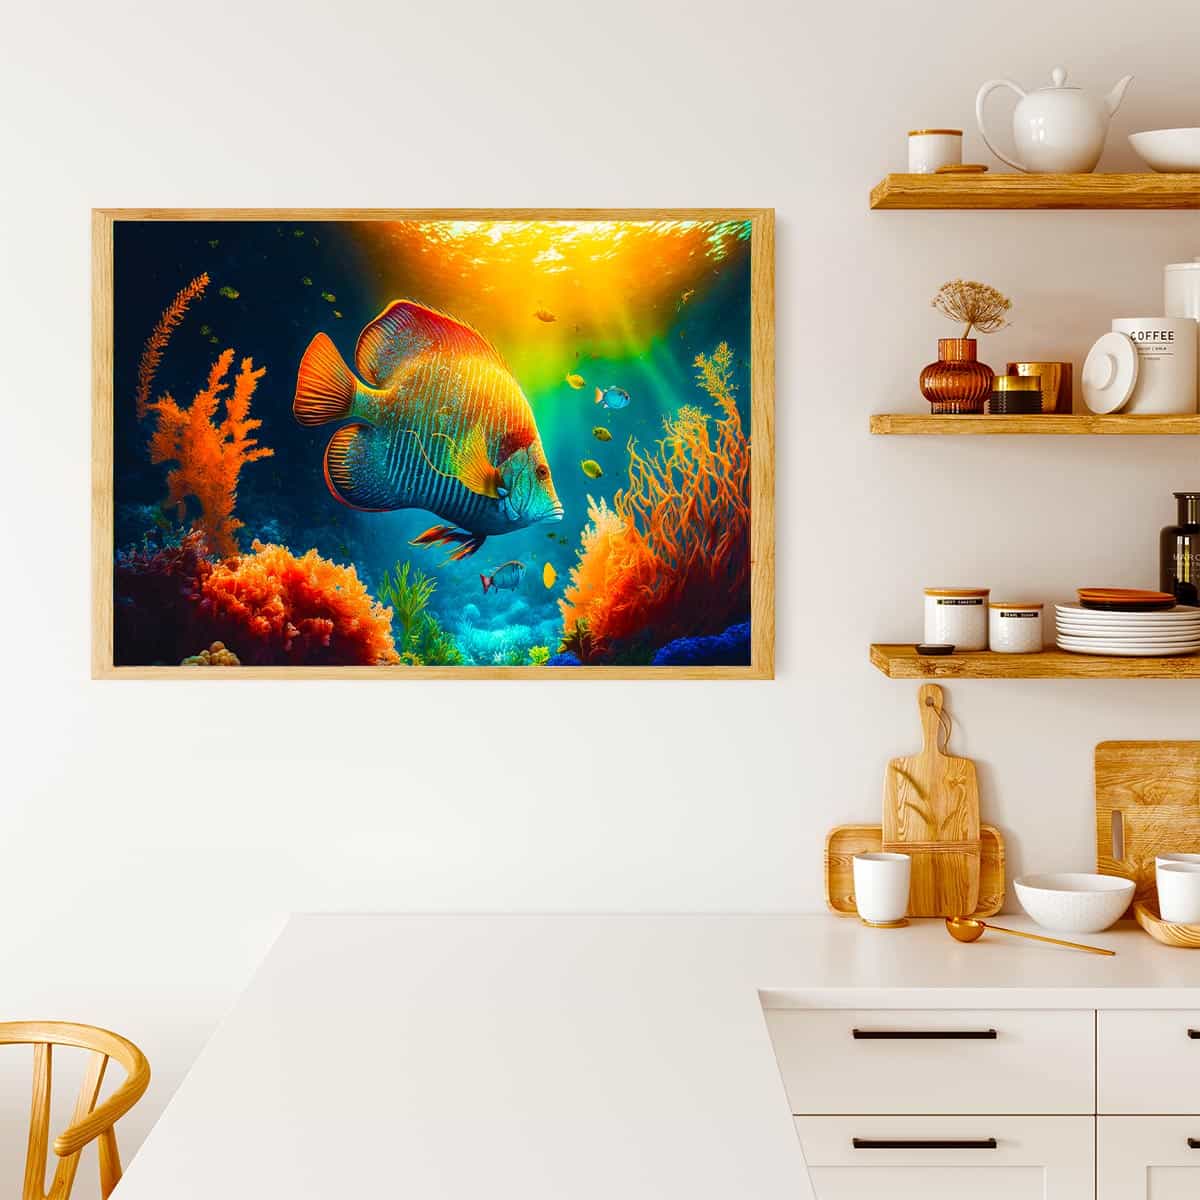 Diamond Painting - Fisch im Sonnenstrahl - gedruckt in Ultra-HD - Fisch, Horizontal, Meer, Tiere